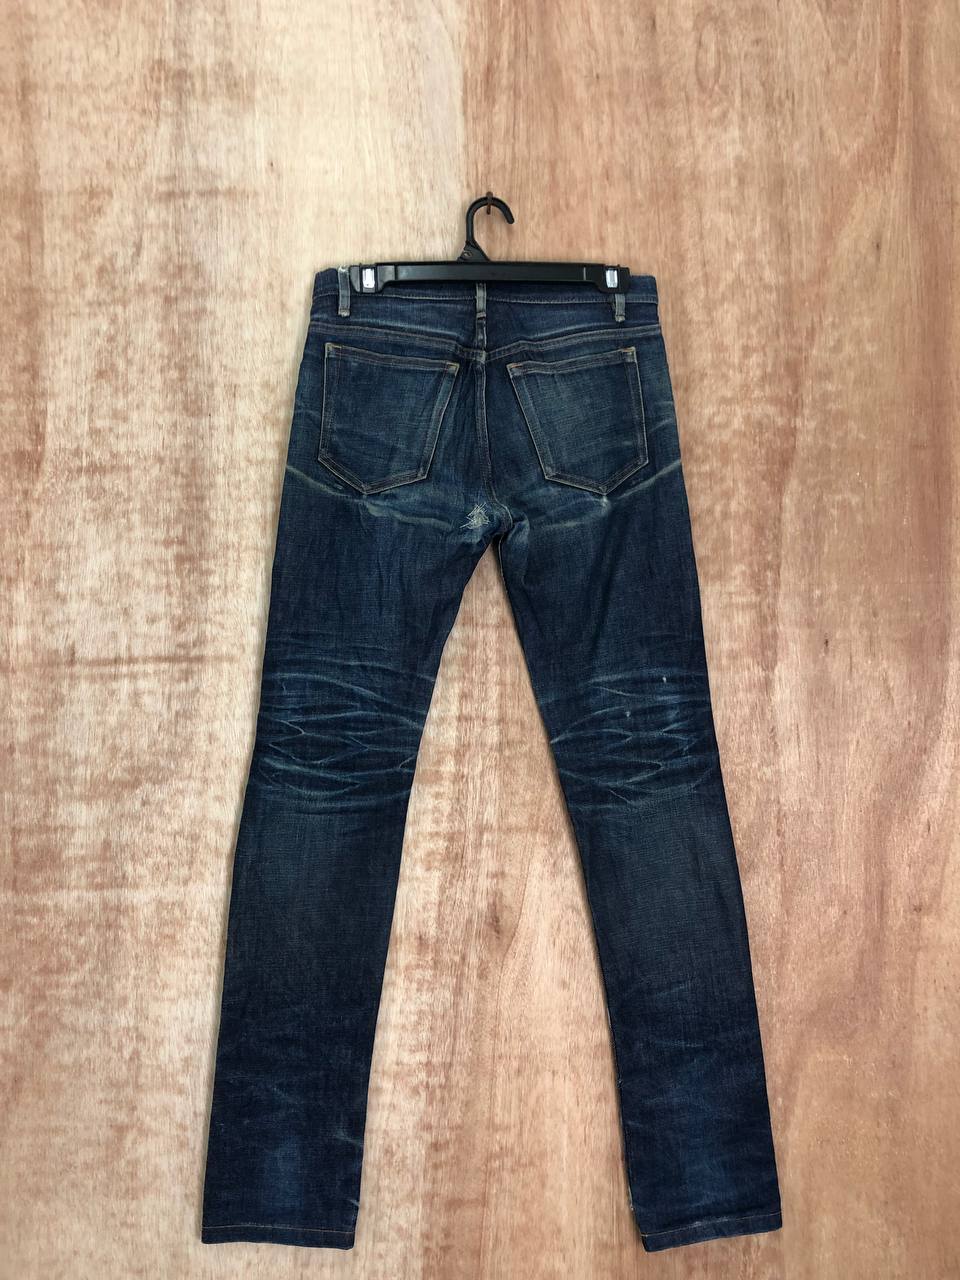 APC Petit Standard Jeans Distressed Selvedge - 2